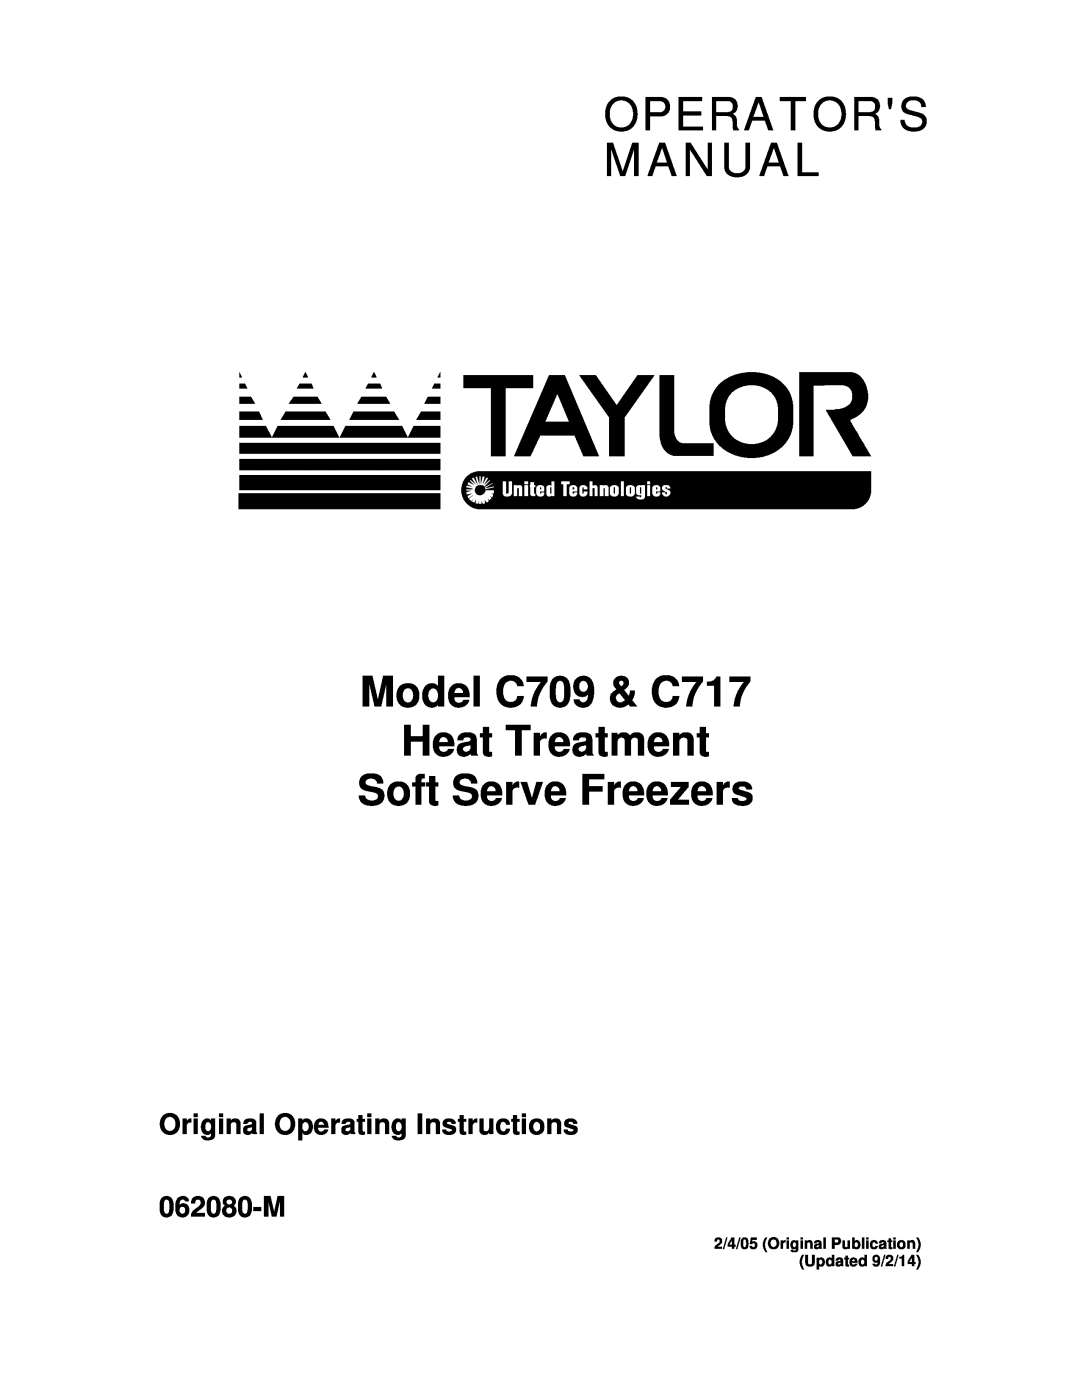 Taylor manual Model C709 & C717 Heat Treatment Soft Serve Freezers, Operators Manual 